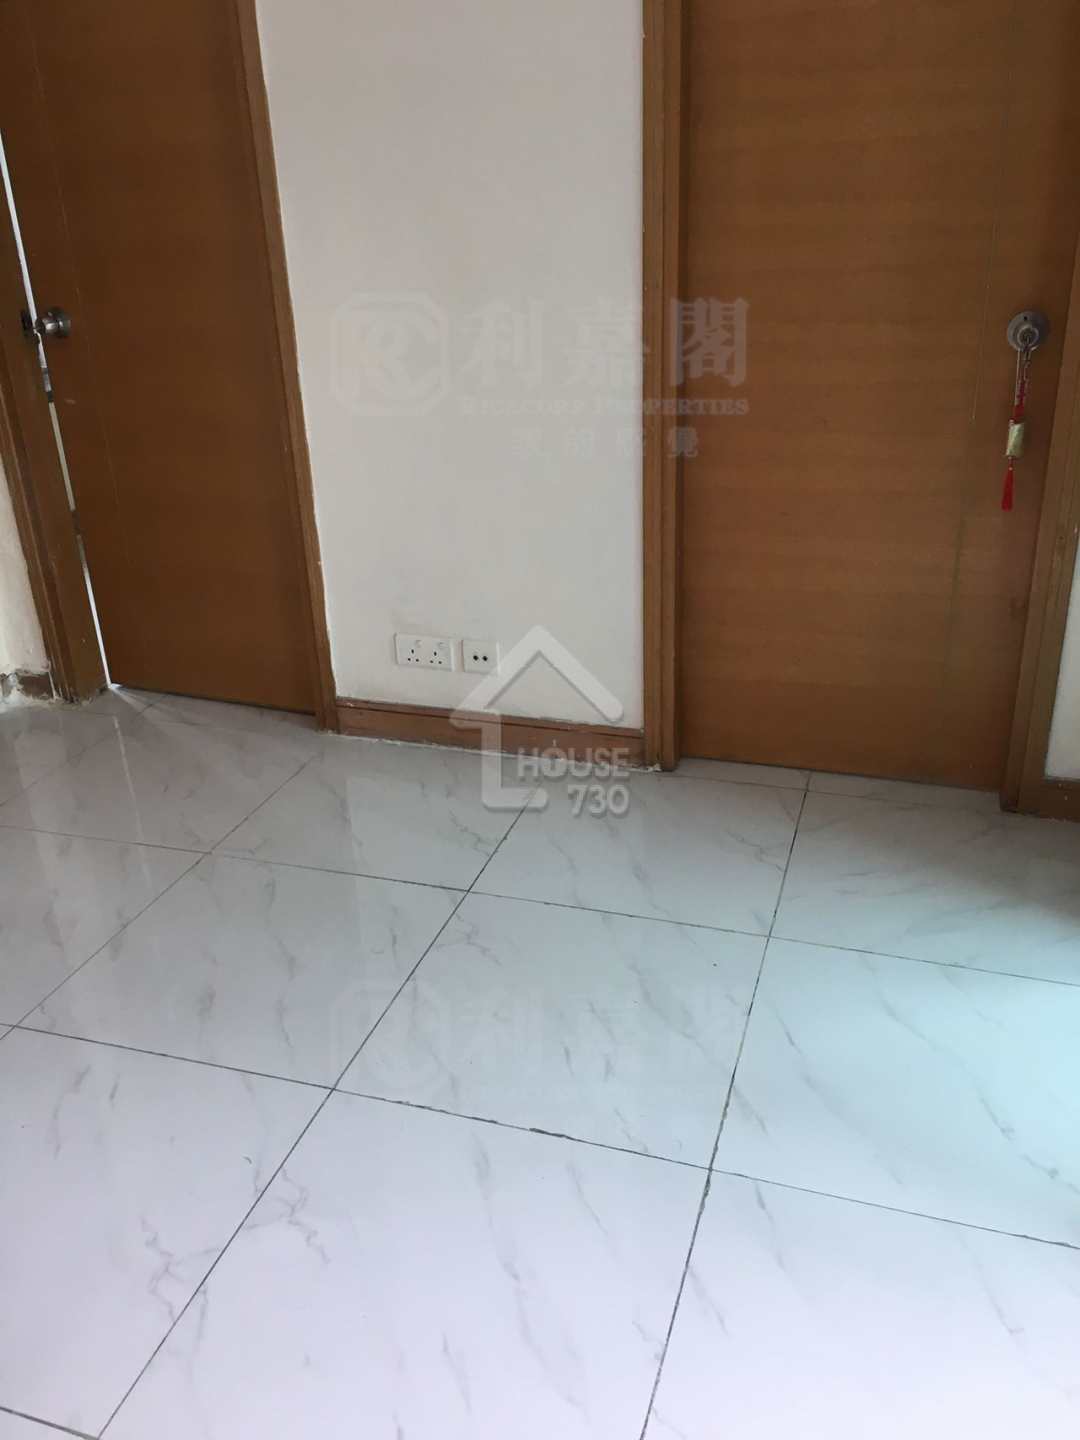 Sham Shui Po HEY HOME Lower Floor Floor Plan House730-5244180